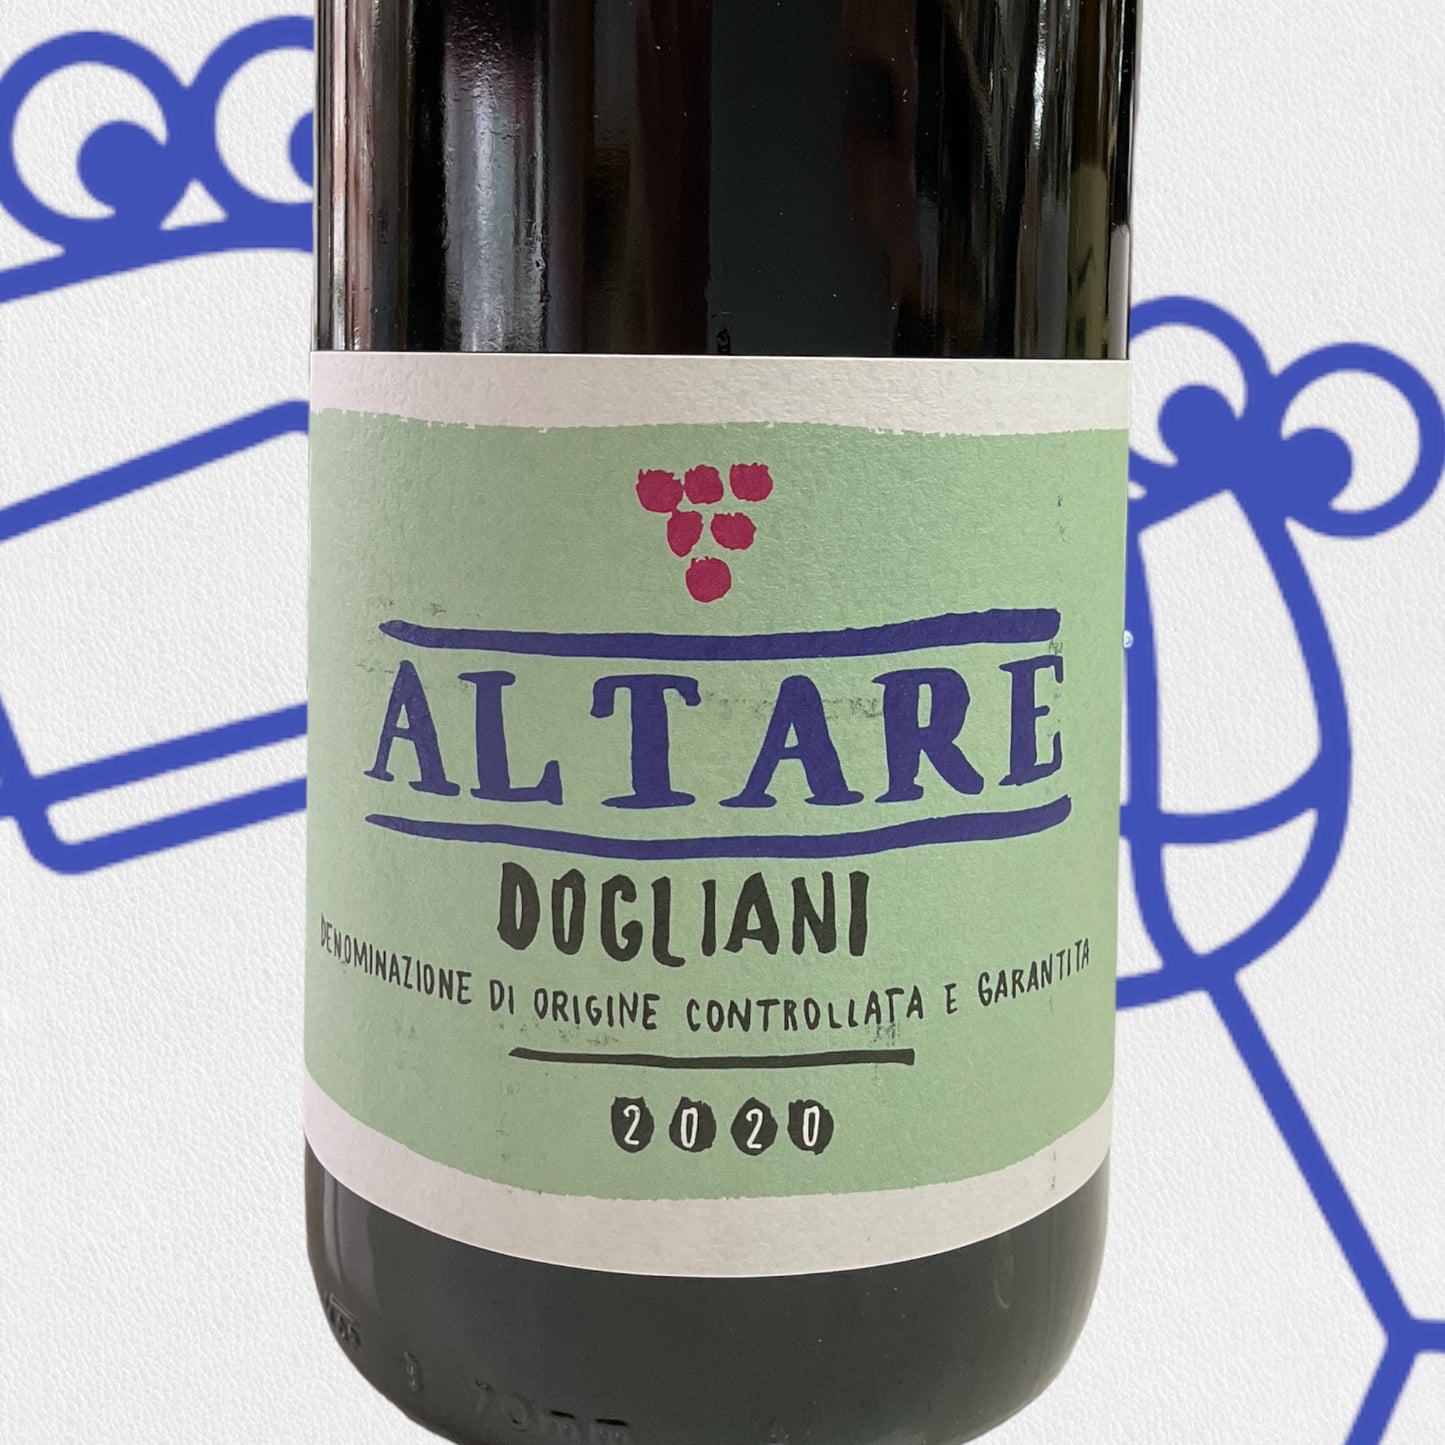 Nicolas Altare 'Dogliani DOCG' 2020 Piedmont, Italy - Williston Park Wines & Spirits